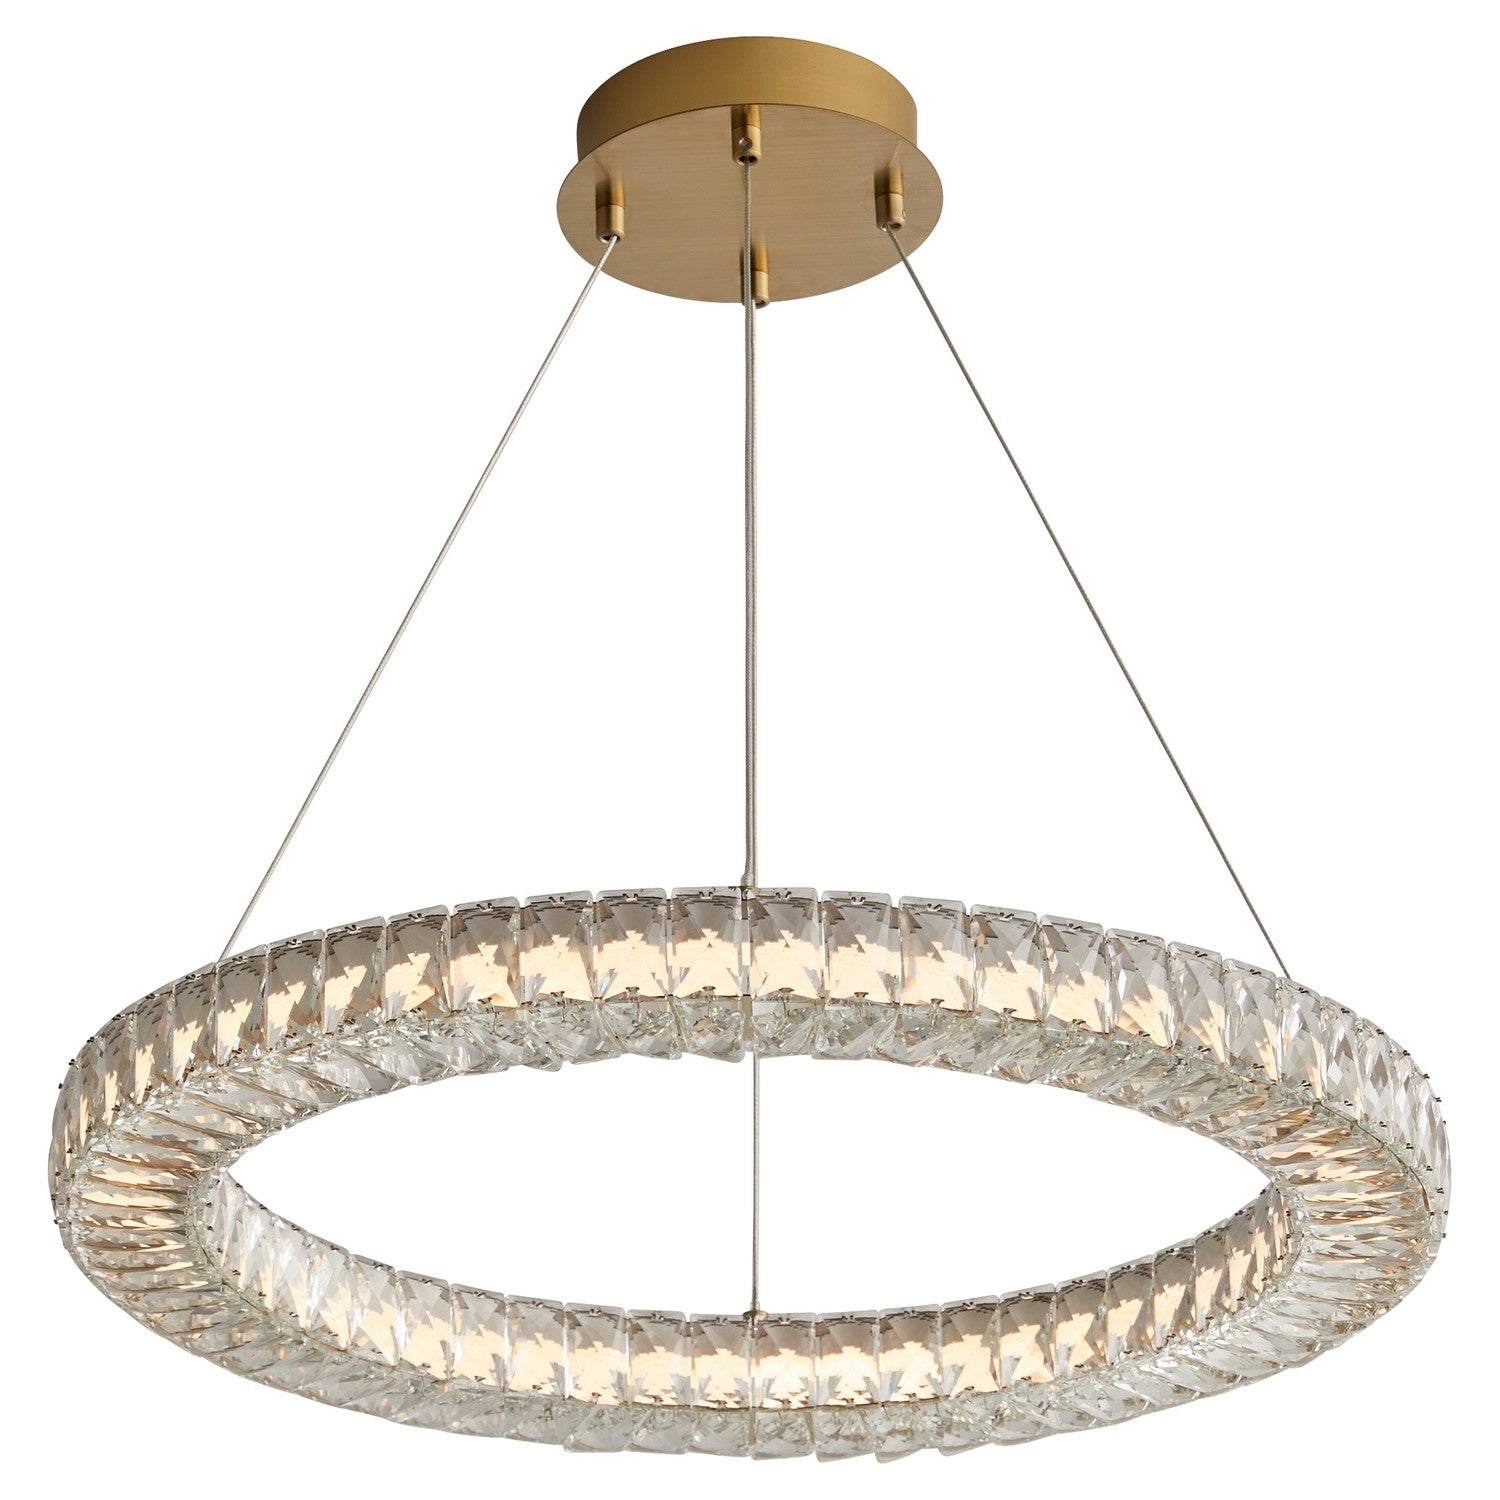 Oxygen Elan 3-874-40 Modern Ring LED Chandelier Light Fixture - Aged Brass, Crystal